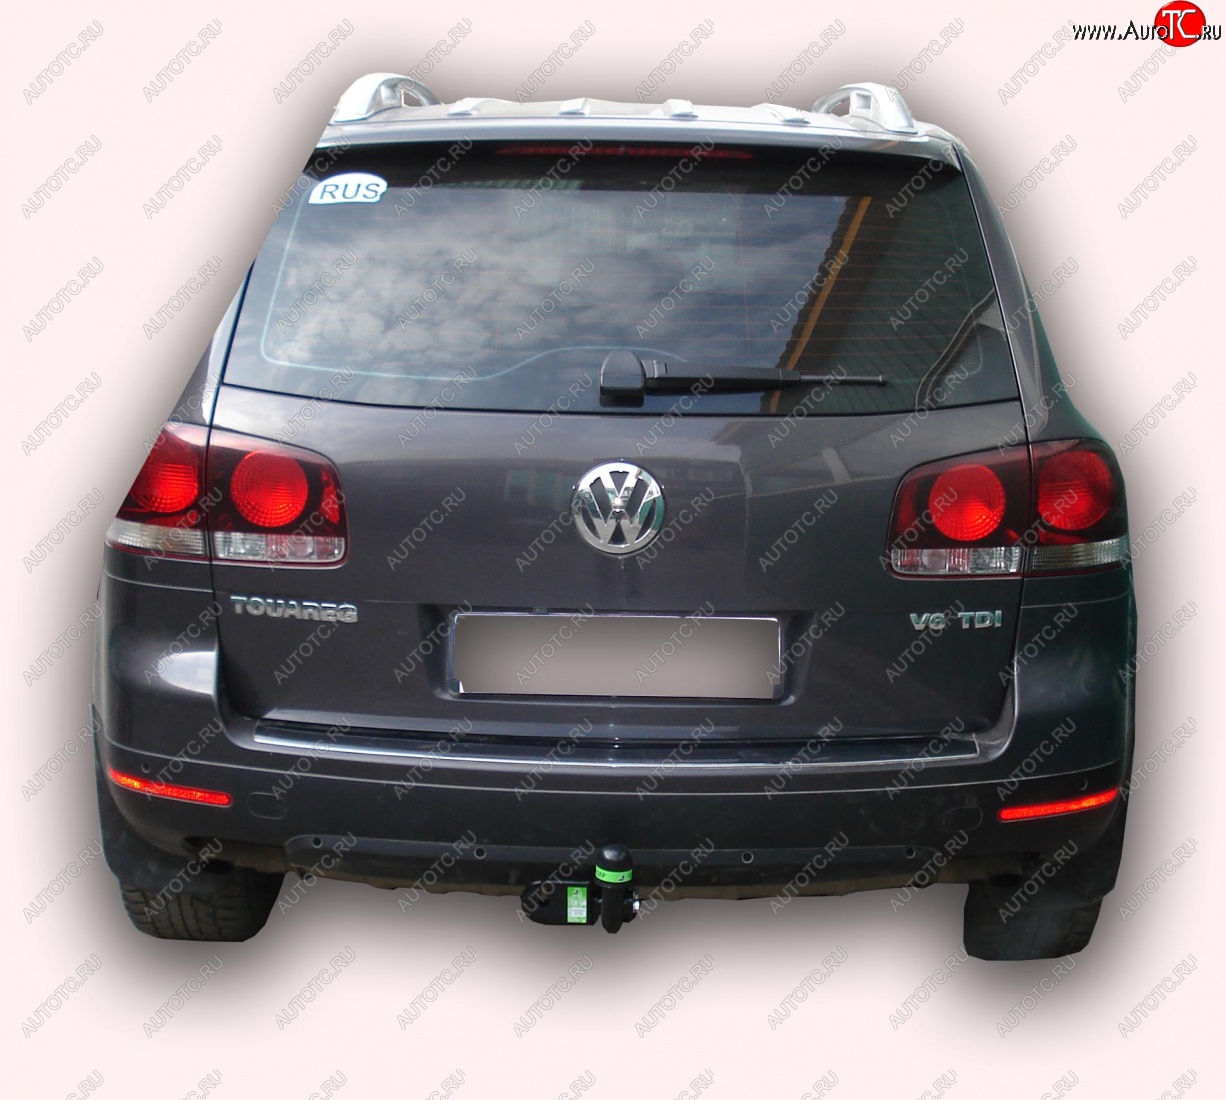 6 799 р. Фаркоп Лидер Плюс (съемный шар тип A) Volkswagen Touareg GP рестайлинг (2006-2010) (Без электропакета)